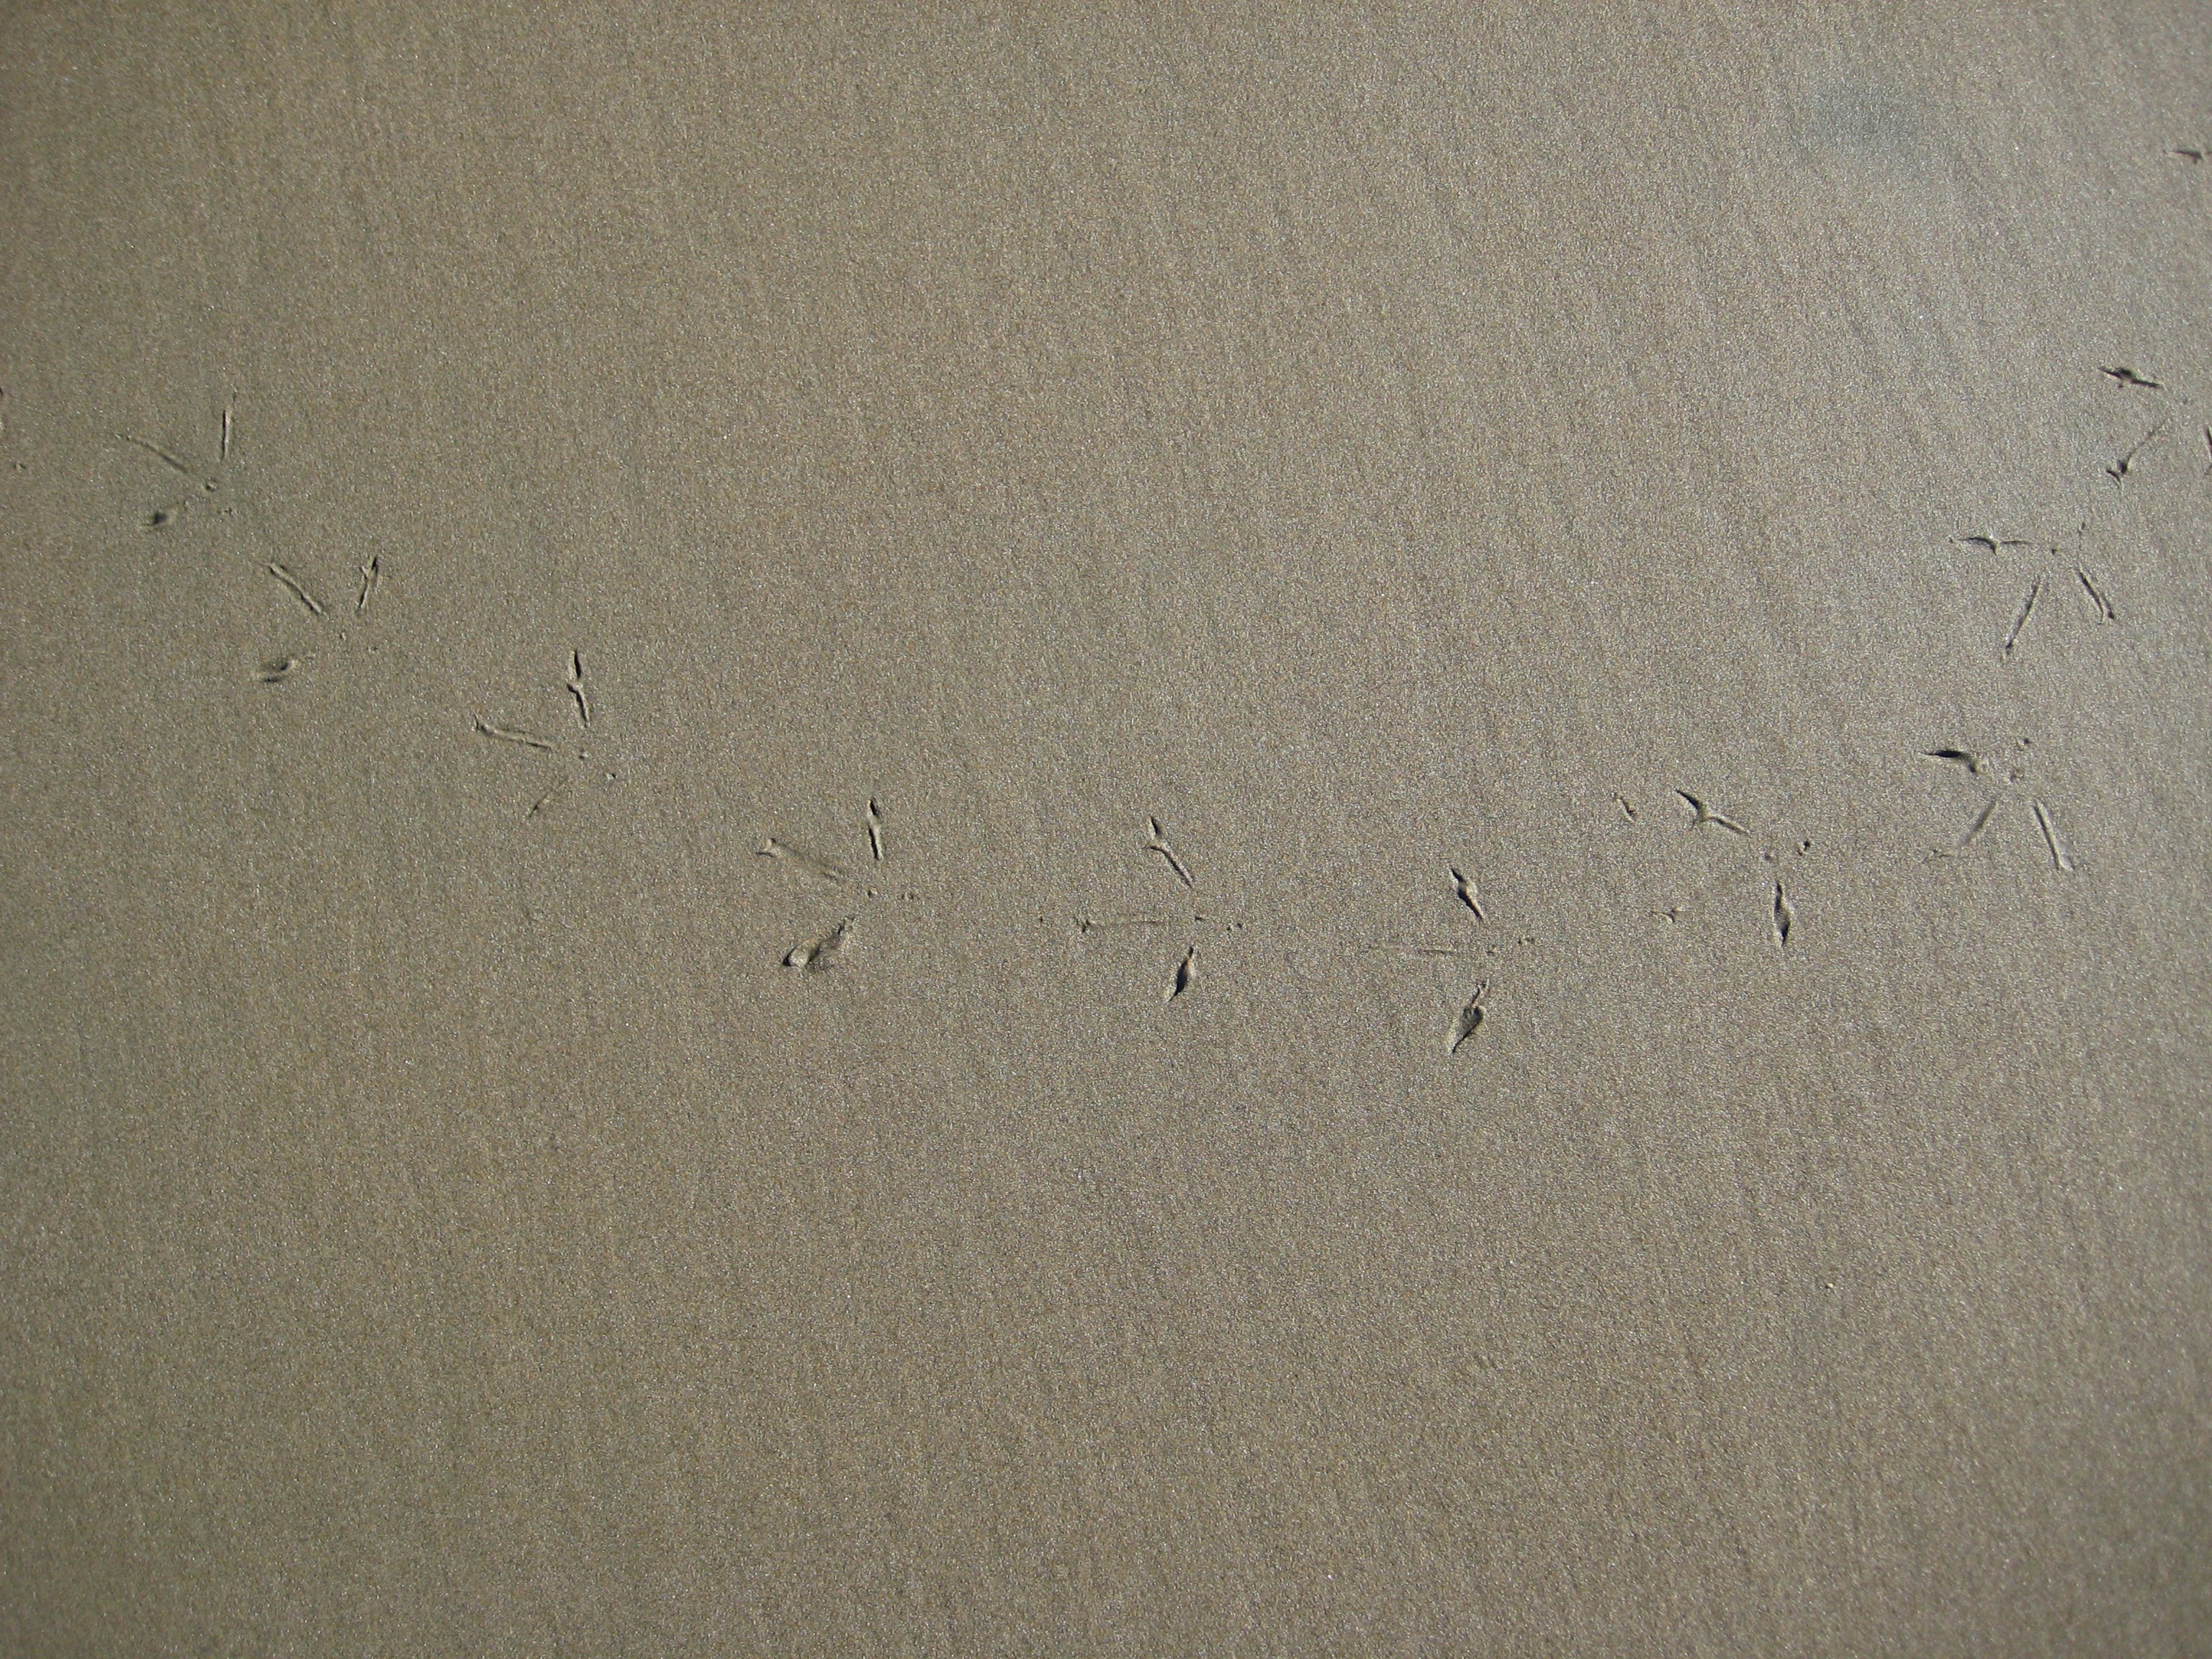 A simple line of bird tracks in wet beach sand.